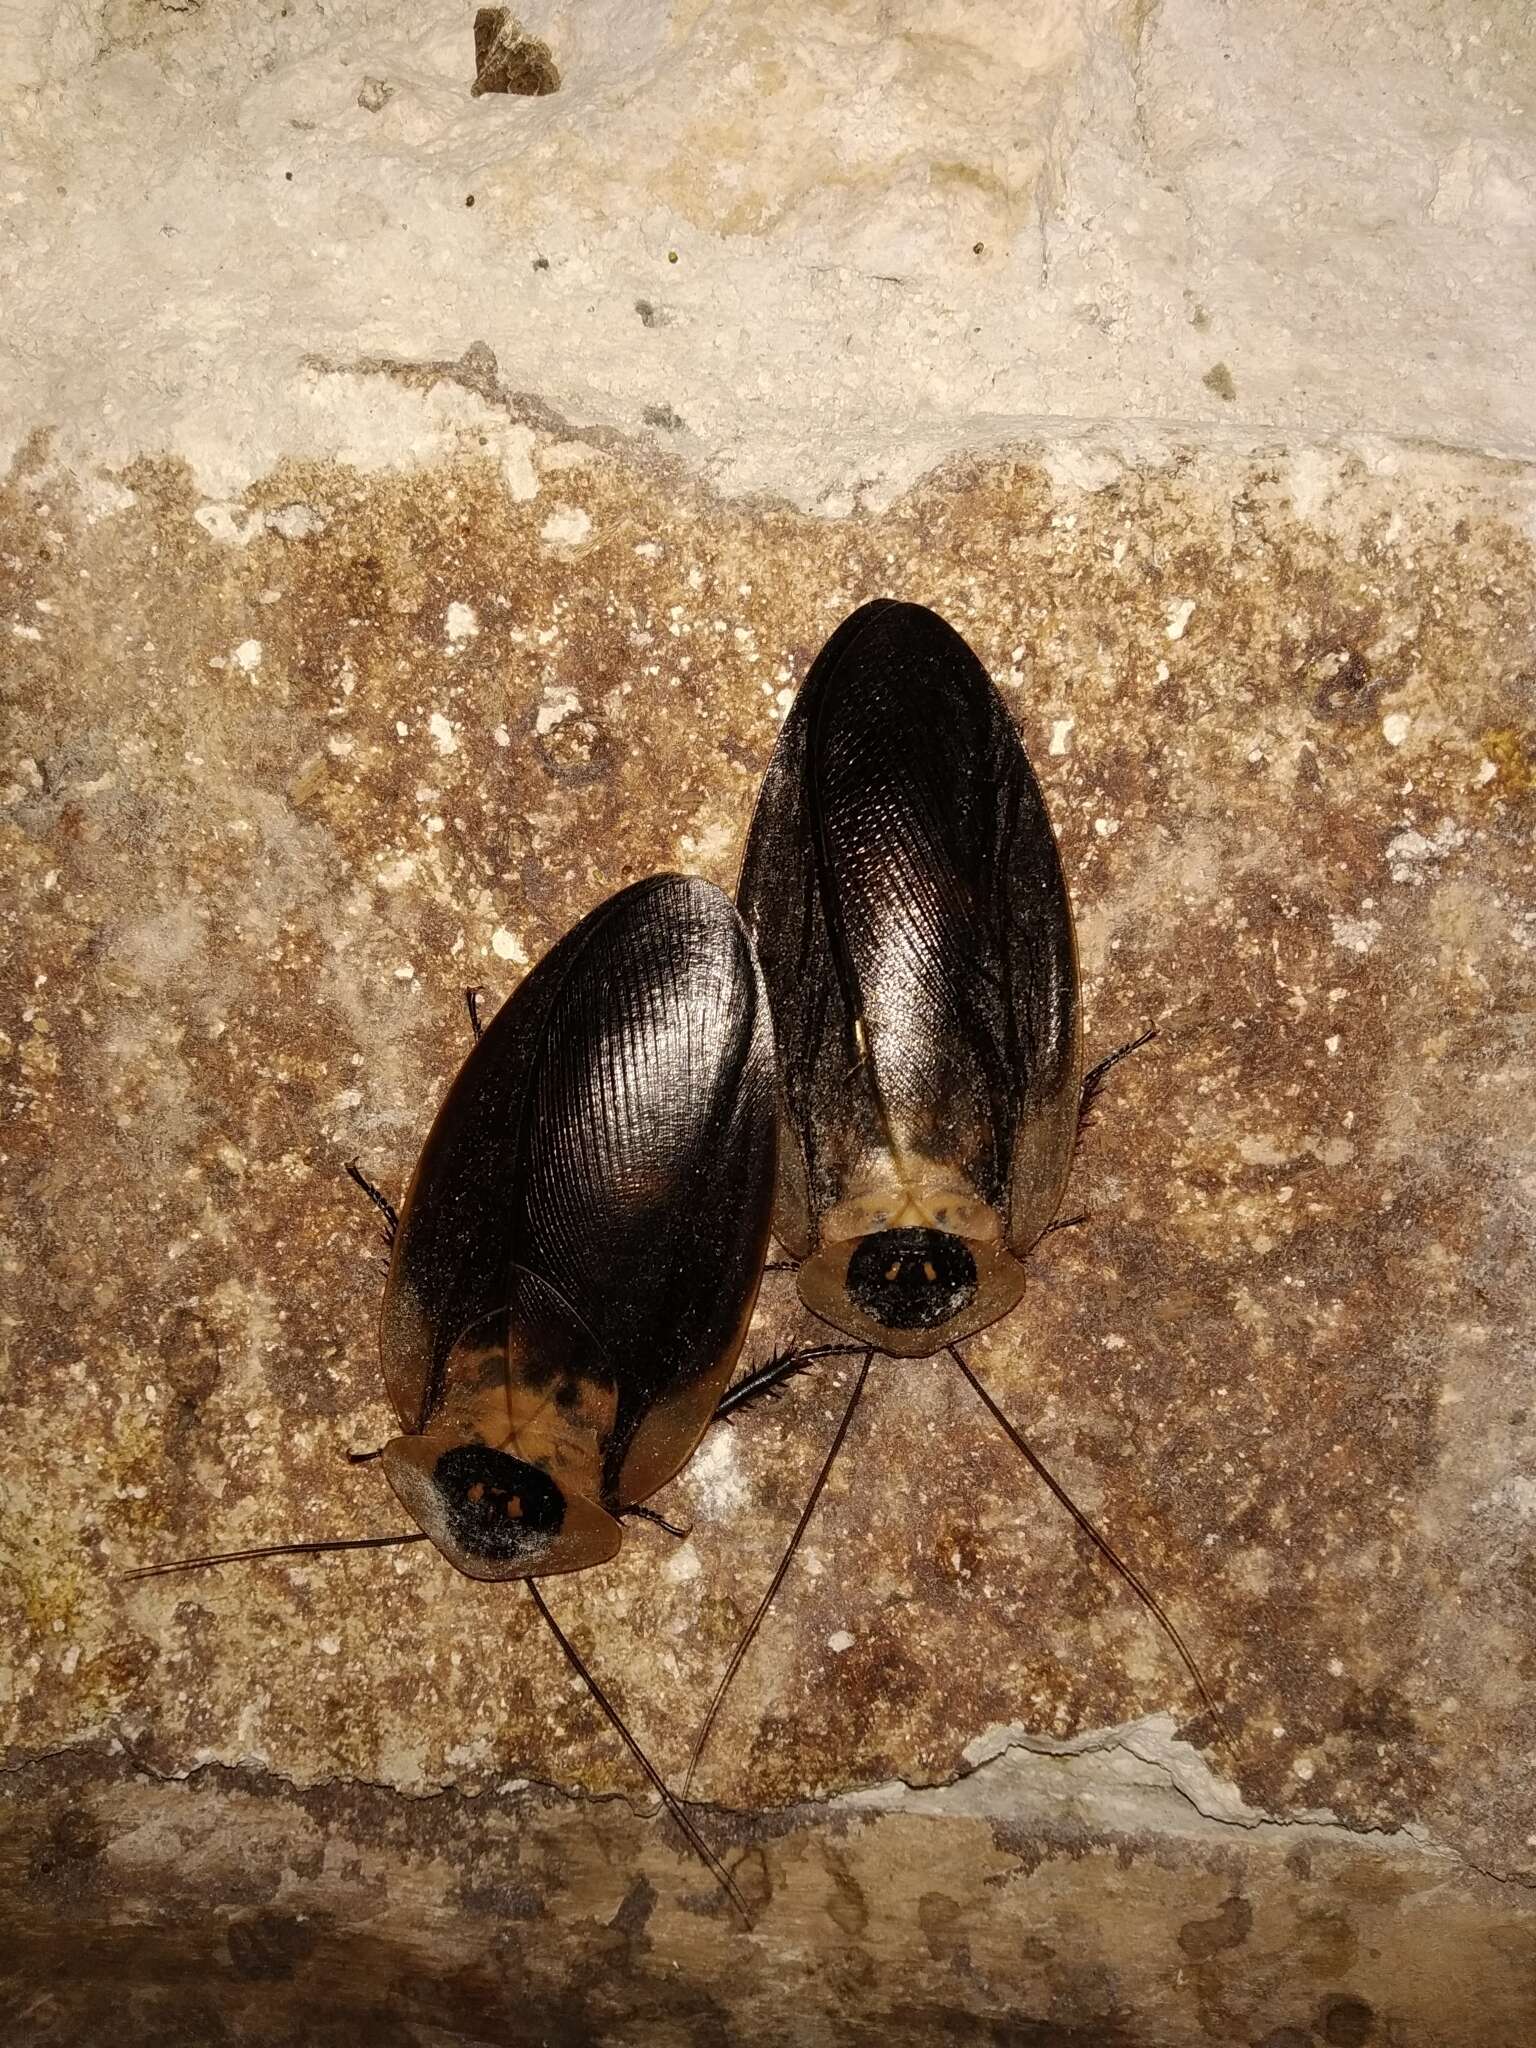 Image of Death's Head Cockroach